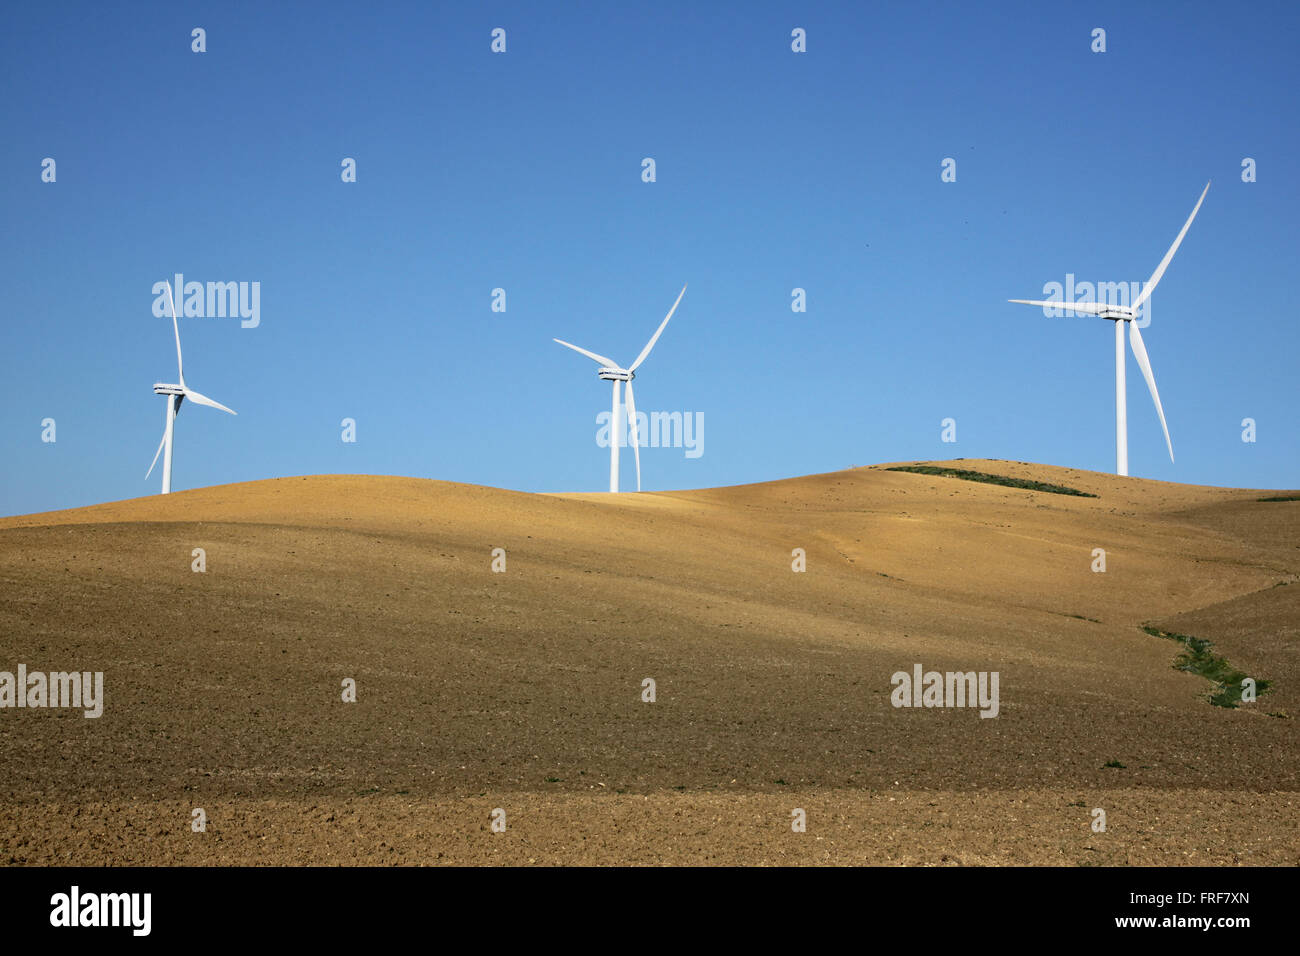 Andalusien, Spanien - 22.02.2012 - Spanien / Andalusien - Windmühle Felder - Sandrine Huet / Le Pictorium Stockfoto